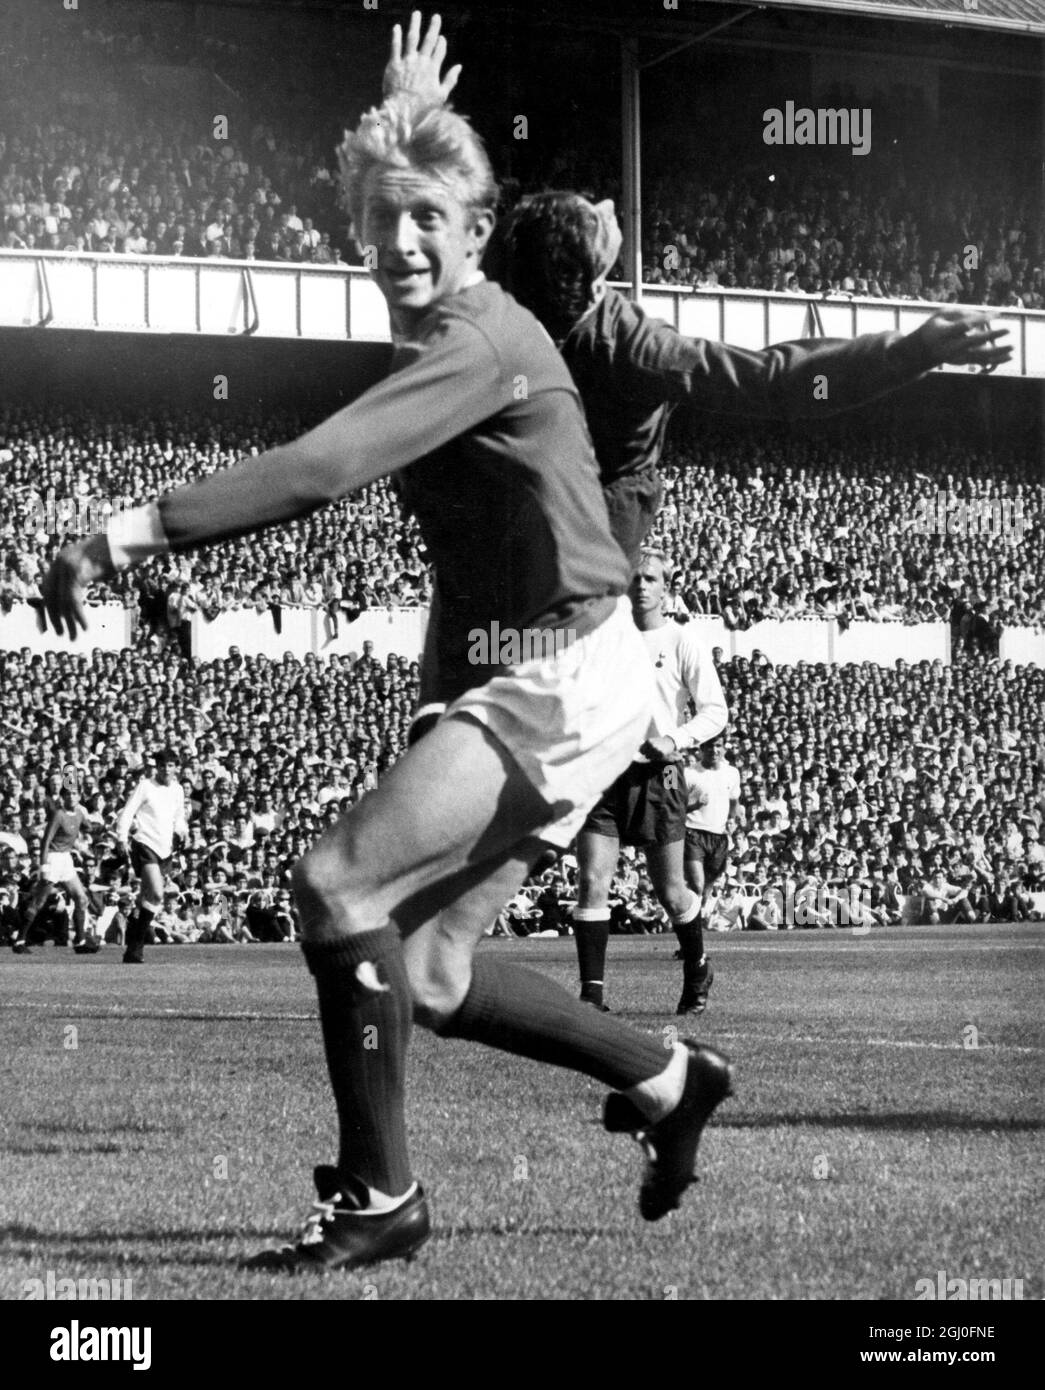 Tottenham Hotspur contra Manchester United Denis Law of Manchester United marca el primer gol de sus equipos durante el partido en White Hart Lane el 10th de septiembre de 1966. Foto de stock